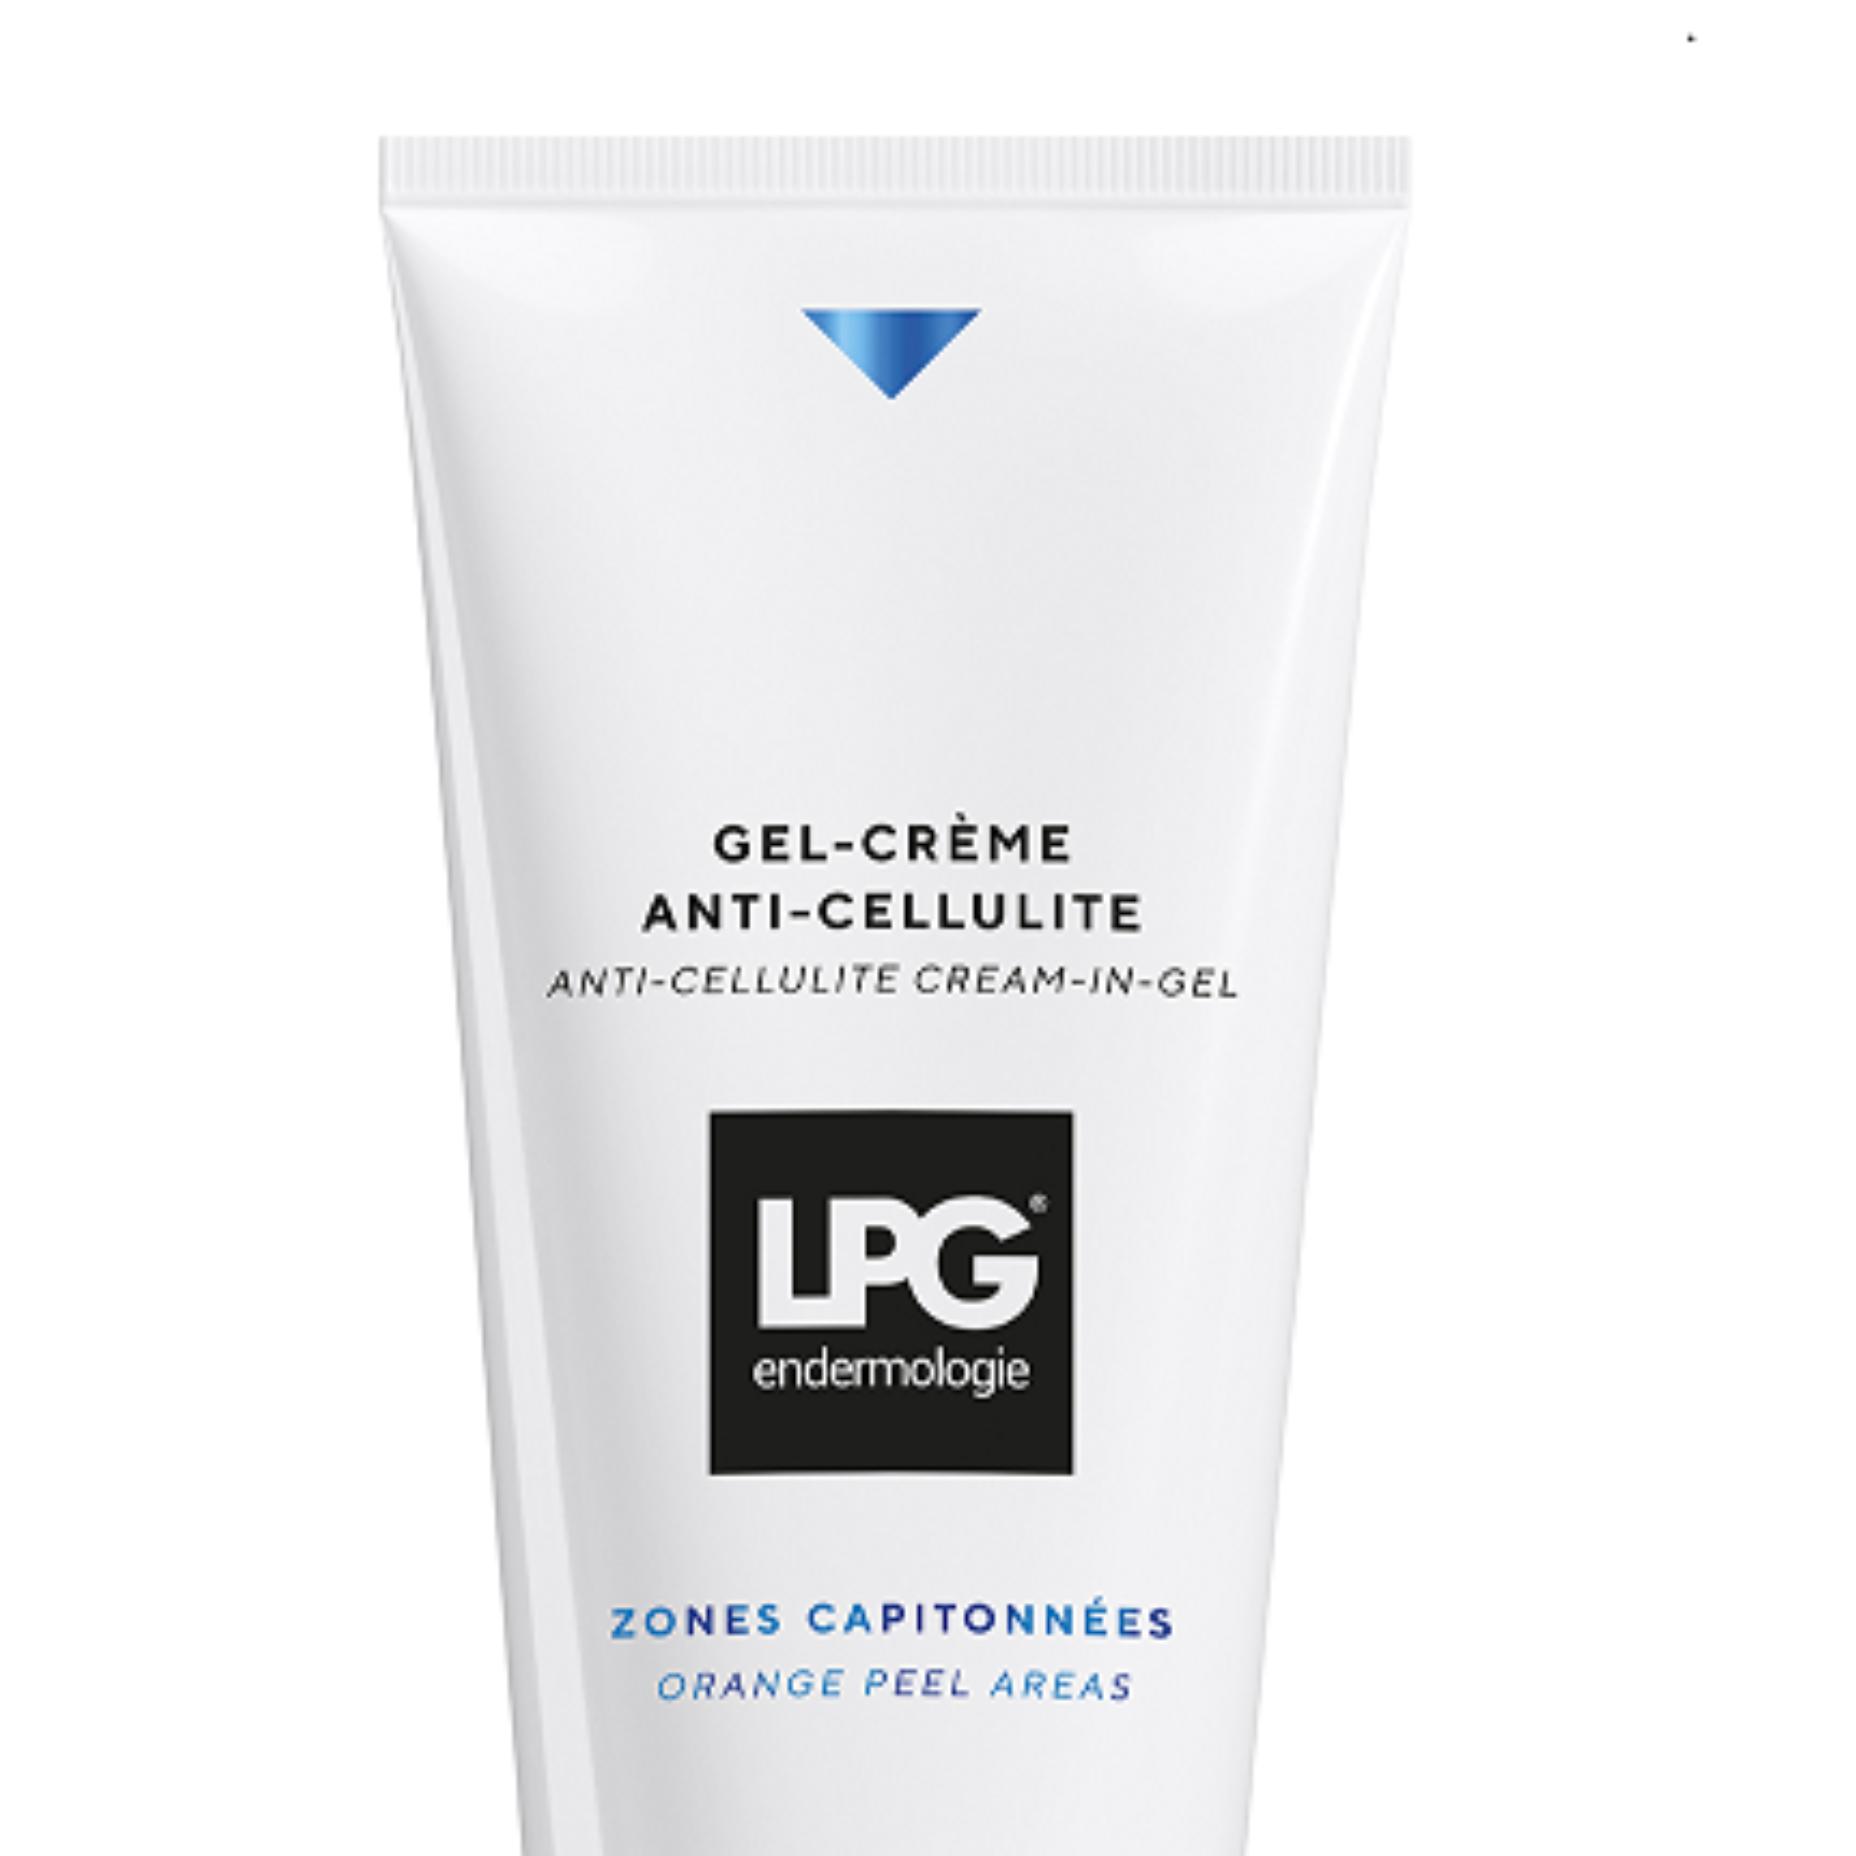 Gel crème anti-cellulite -200ml